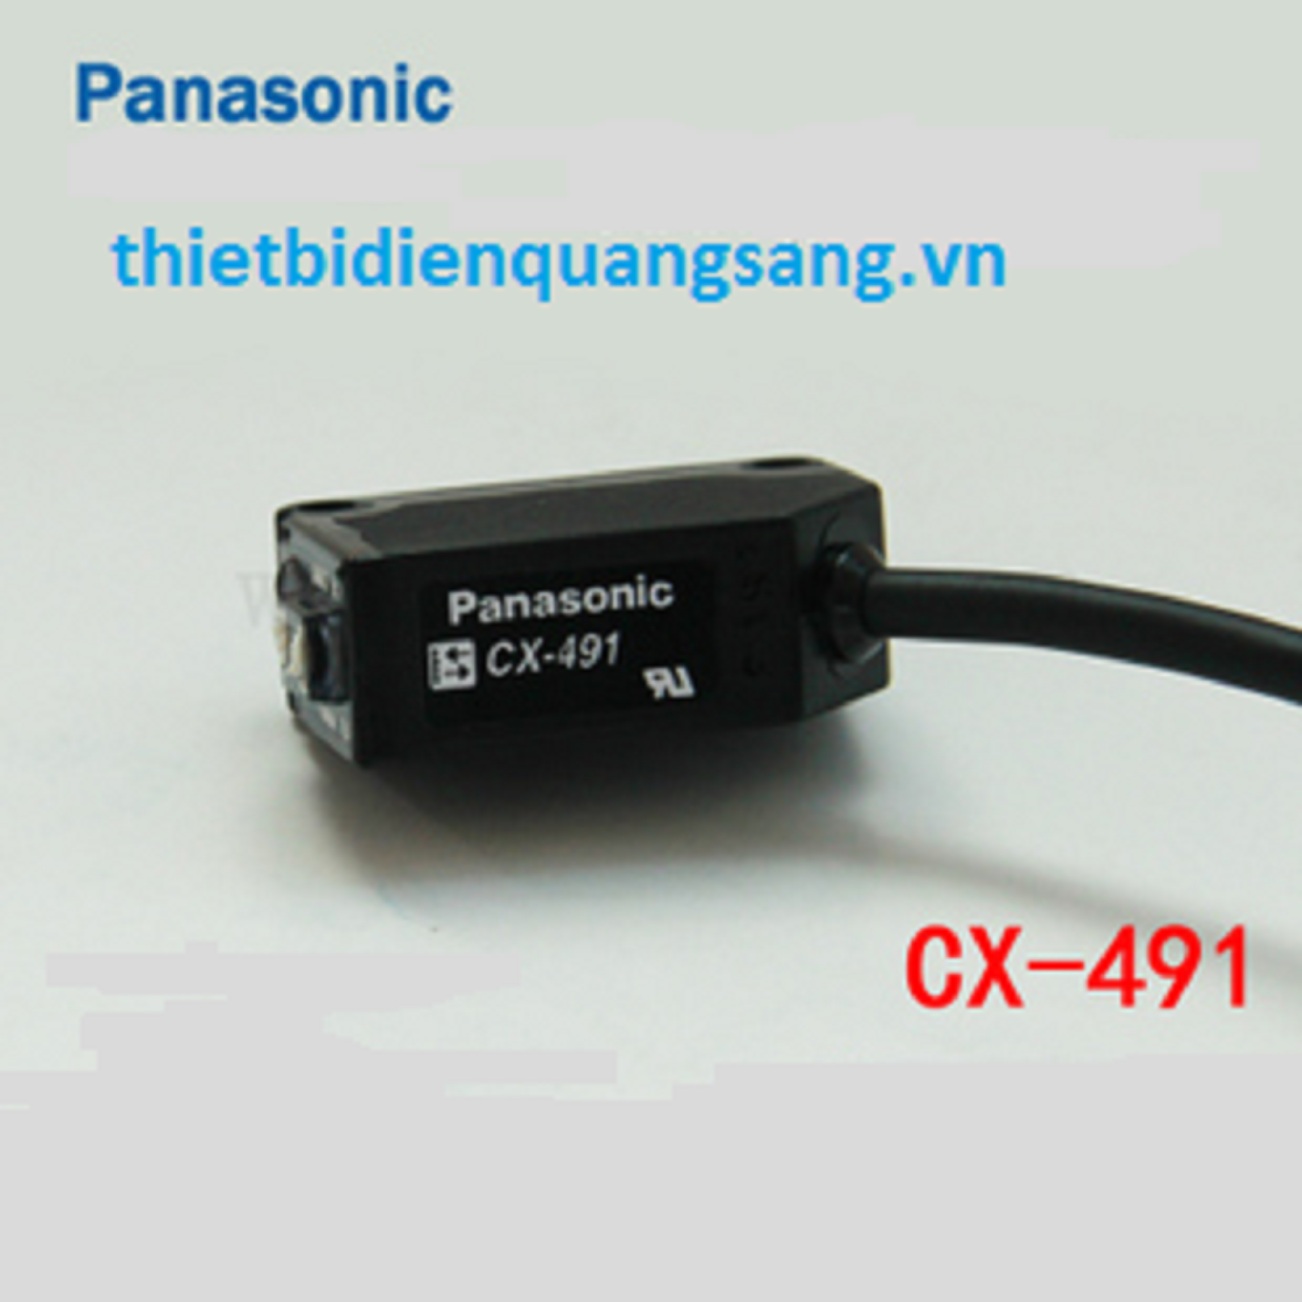 Panasonic CX-491